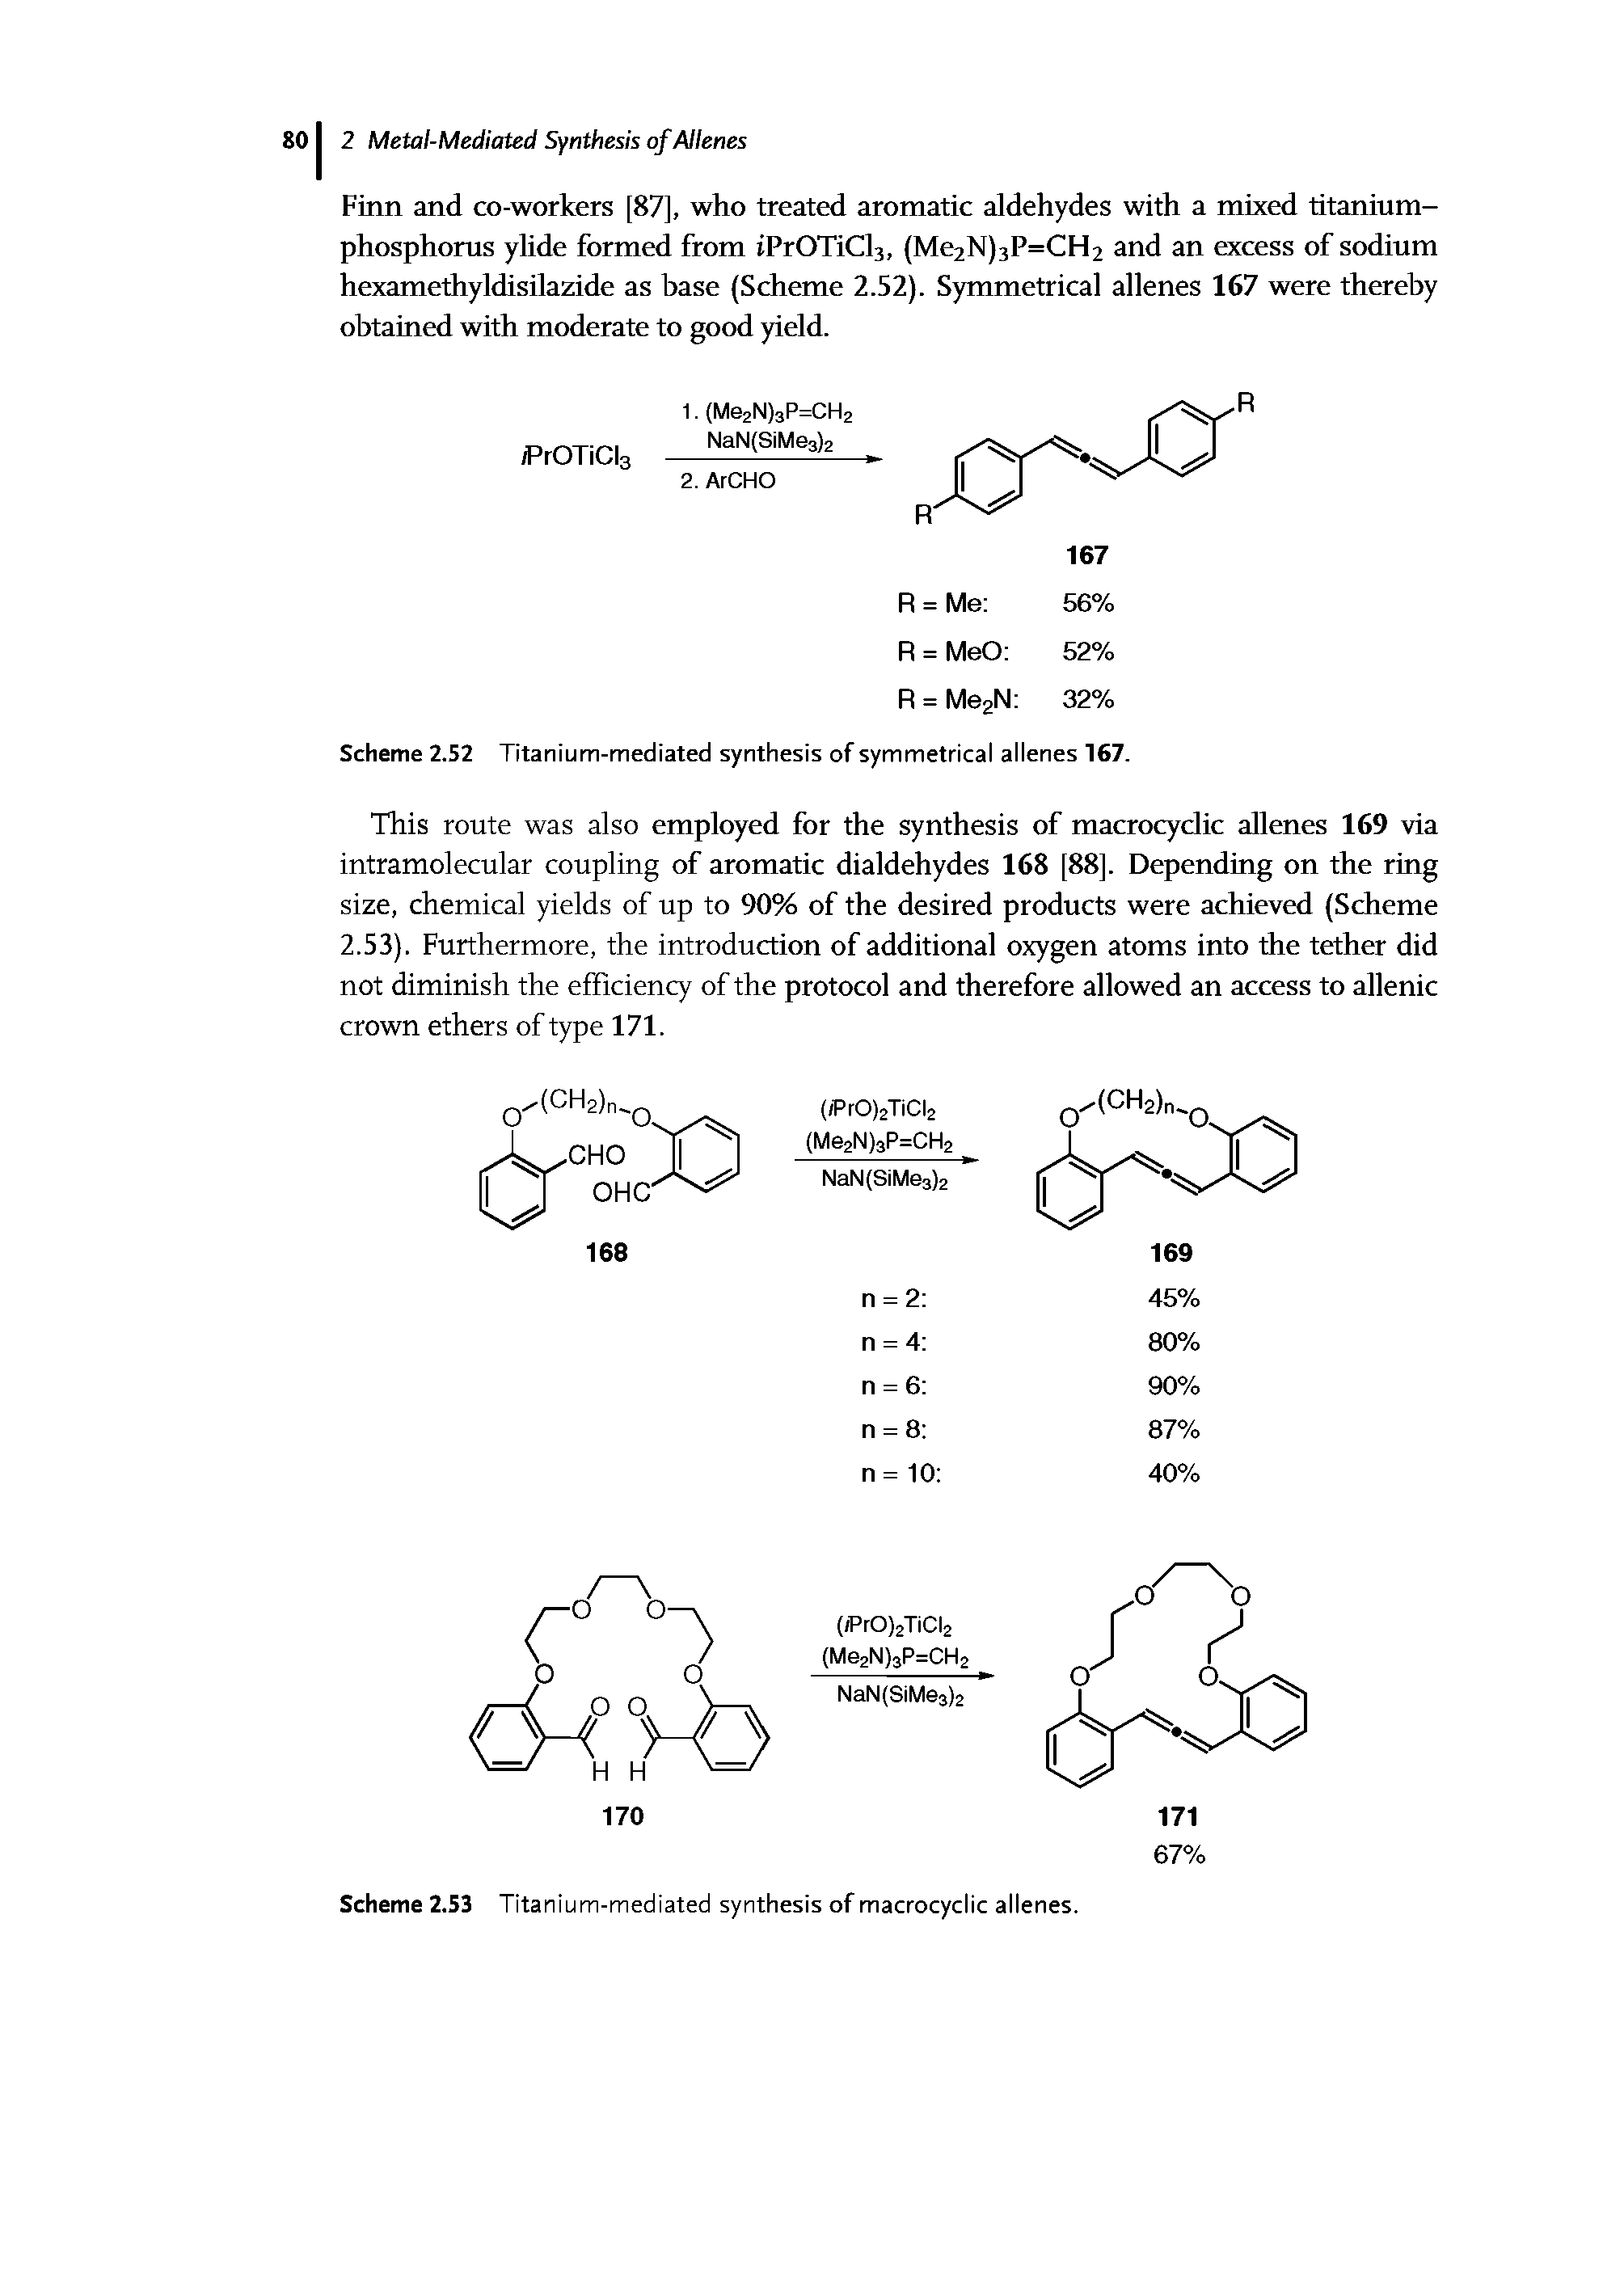 Scheme 2.53 Titanium-mediated synthesis of macrocydic allenes.